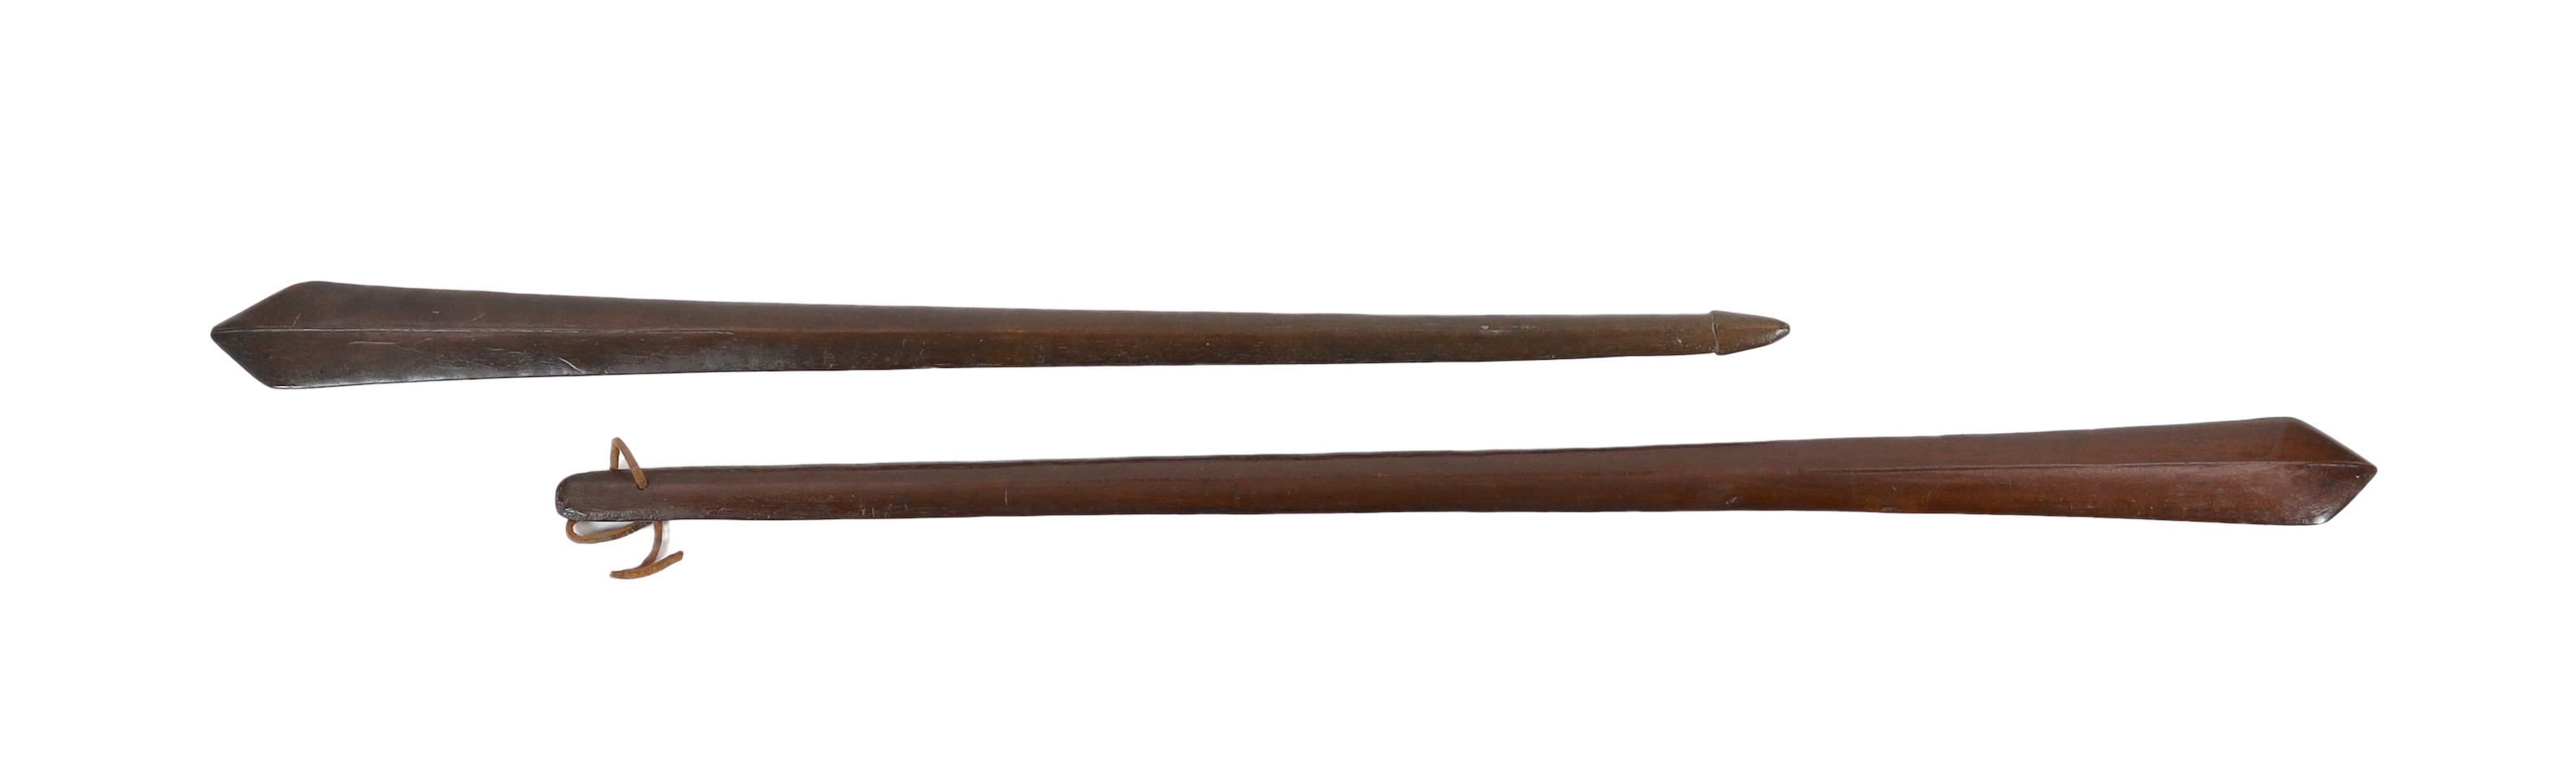 Two Teivakatoga Fijian hardwood war clubs, 120cm and 106cm long                                                                                                                                                             